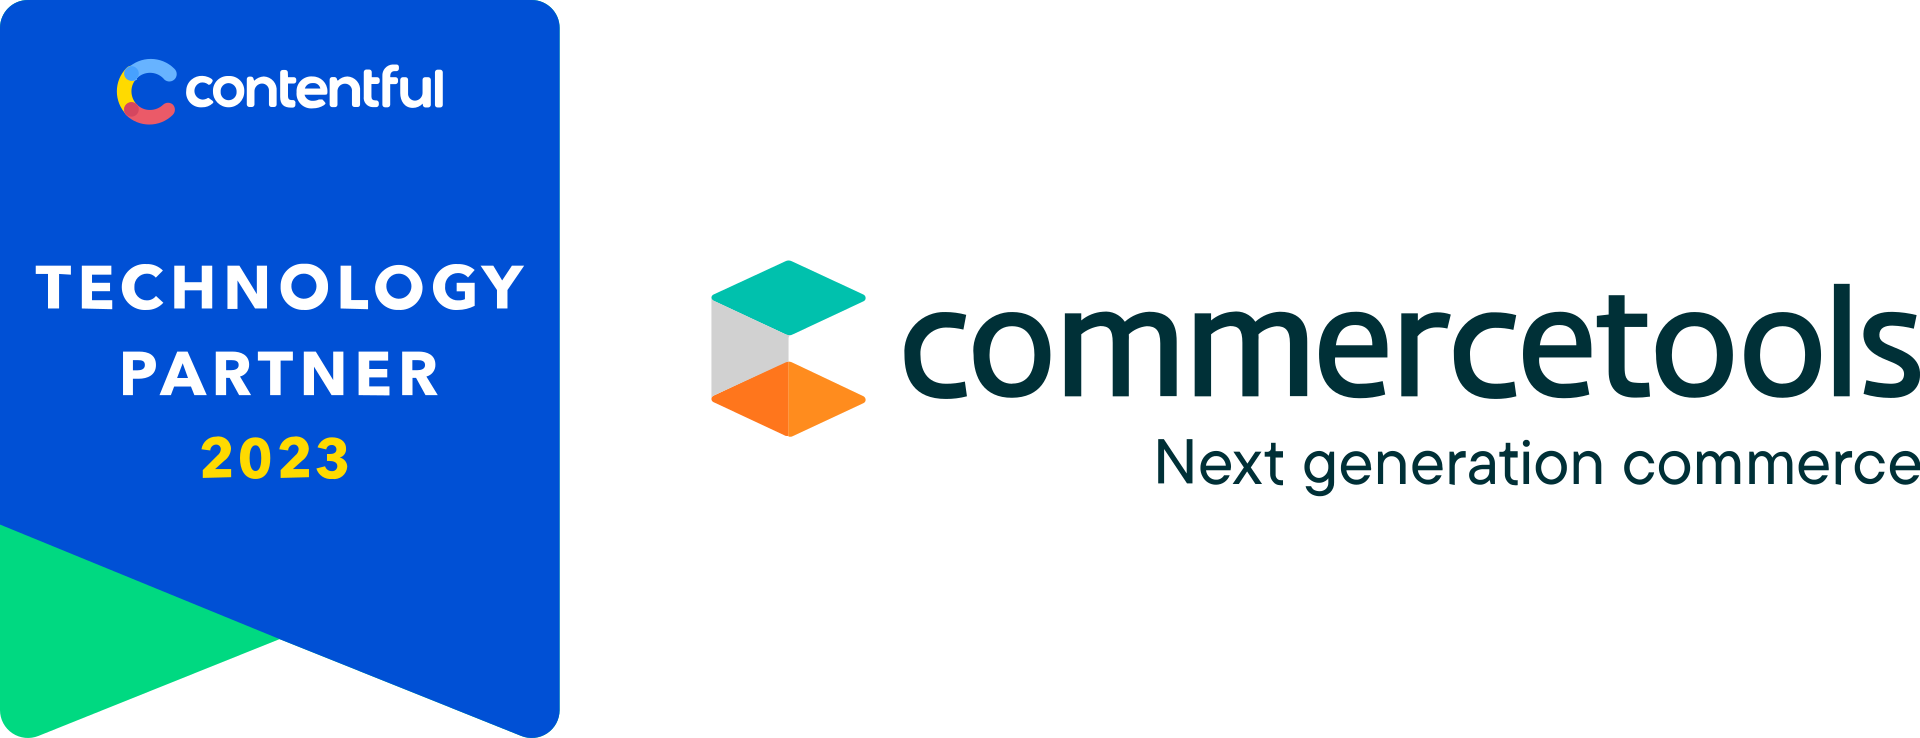 Technology Partner 2023: commercetools